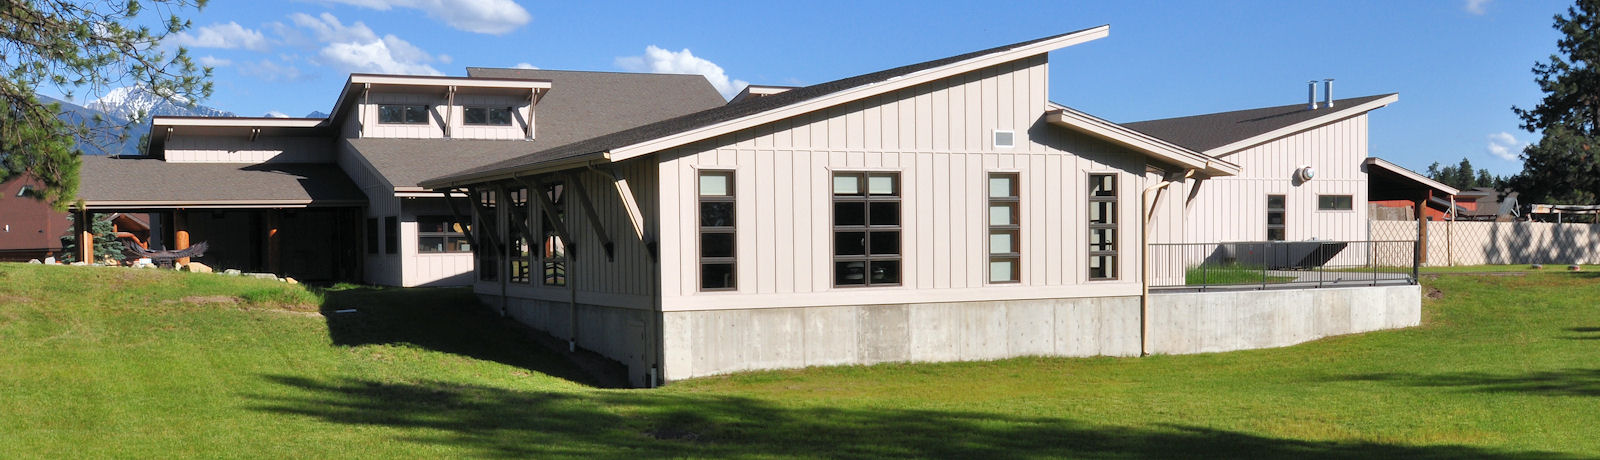 Salish Kootenai College Art Building Addition